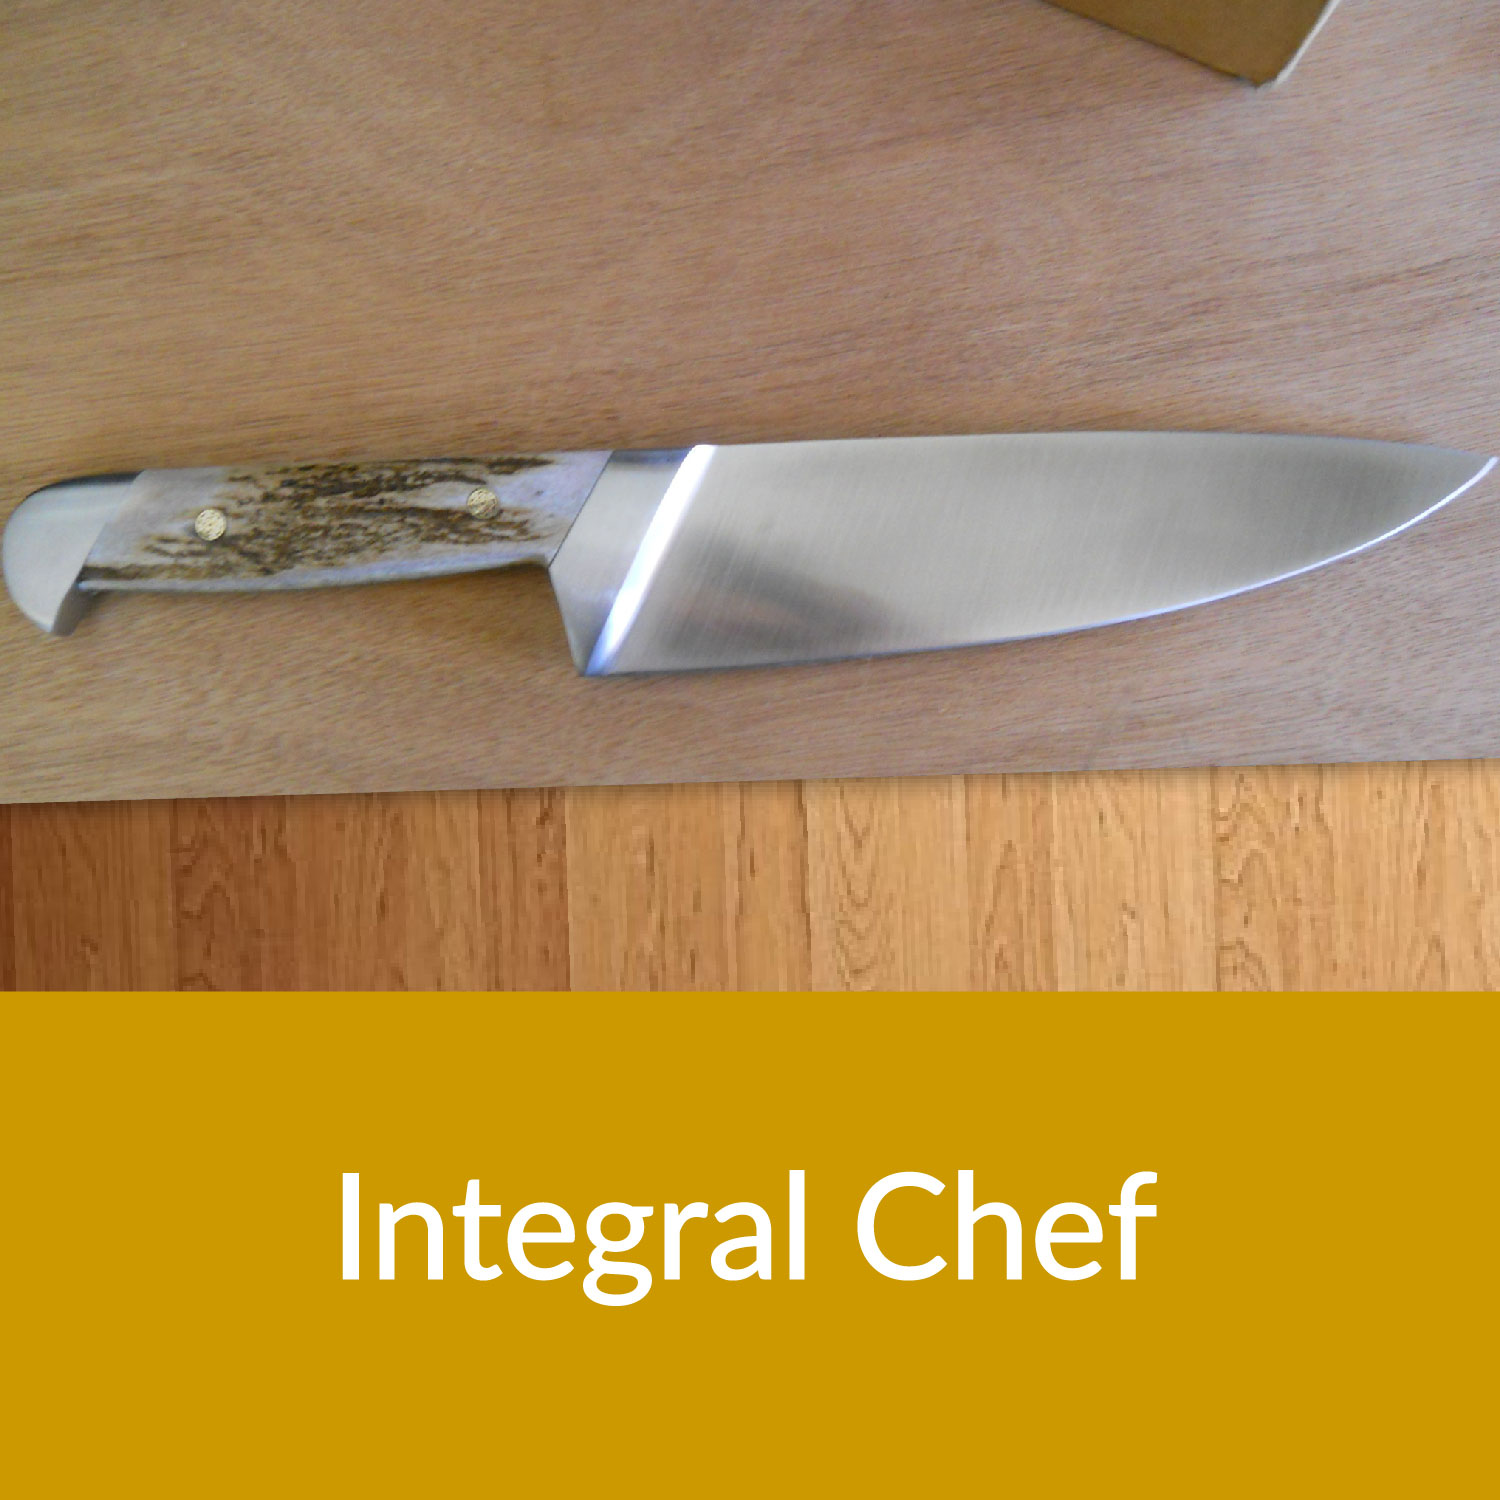 The Integral Chef